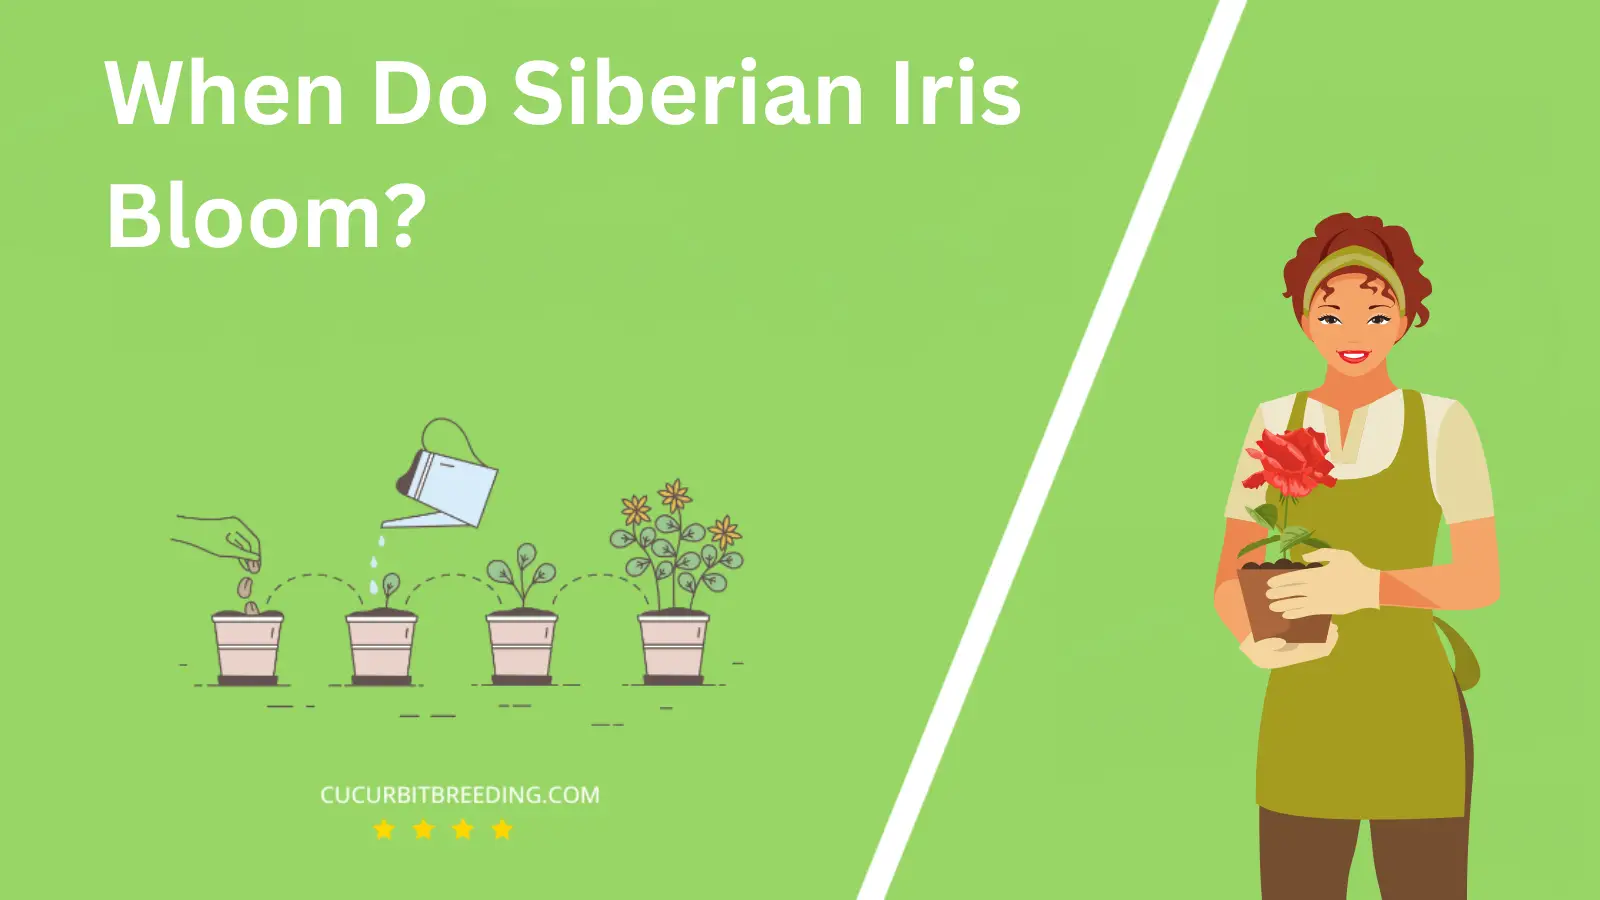 When Do Siberian Iris Bloom?